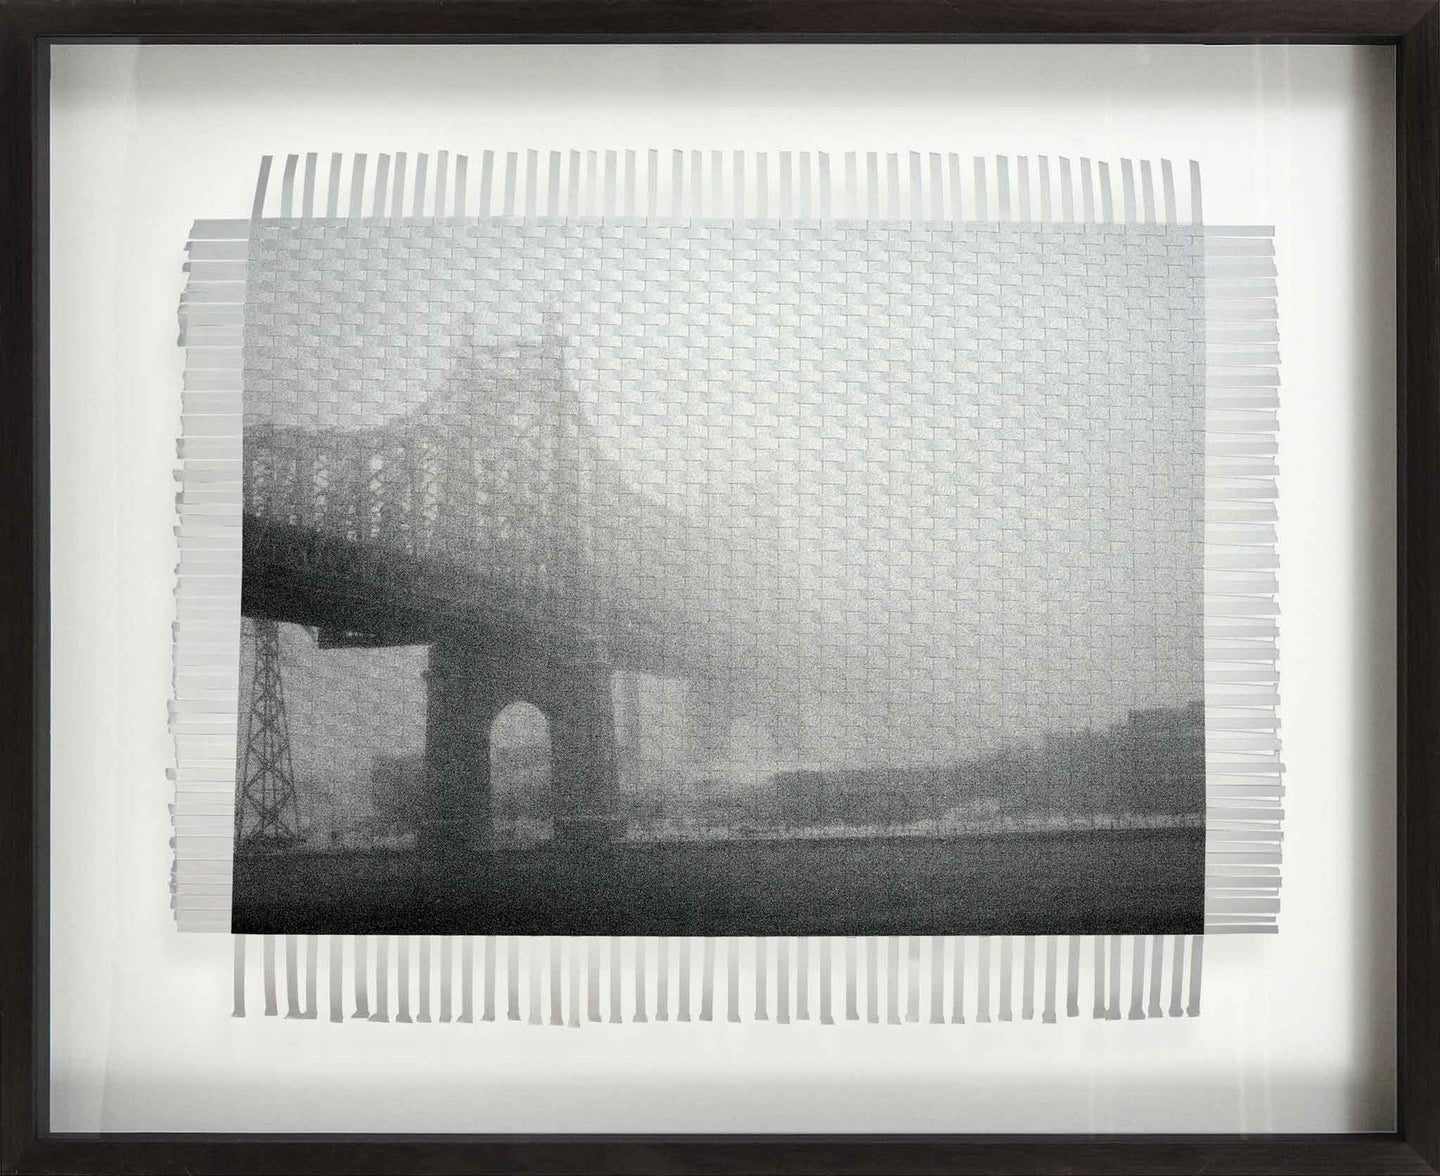 FOGGY BRIDGE NYC - HAND WOVEN PHOTOGRAPH